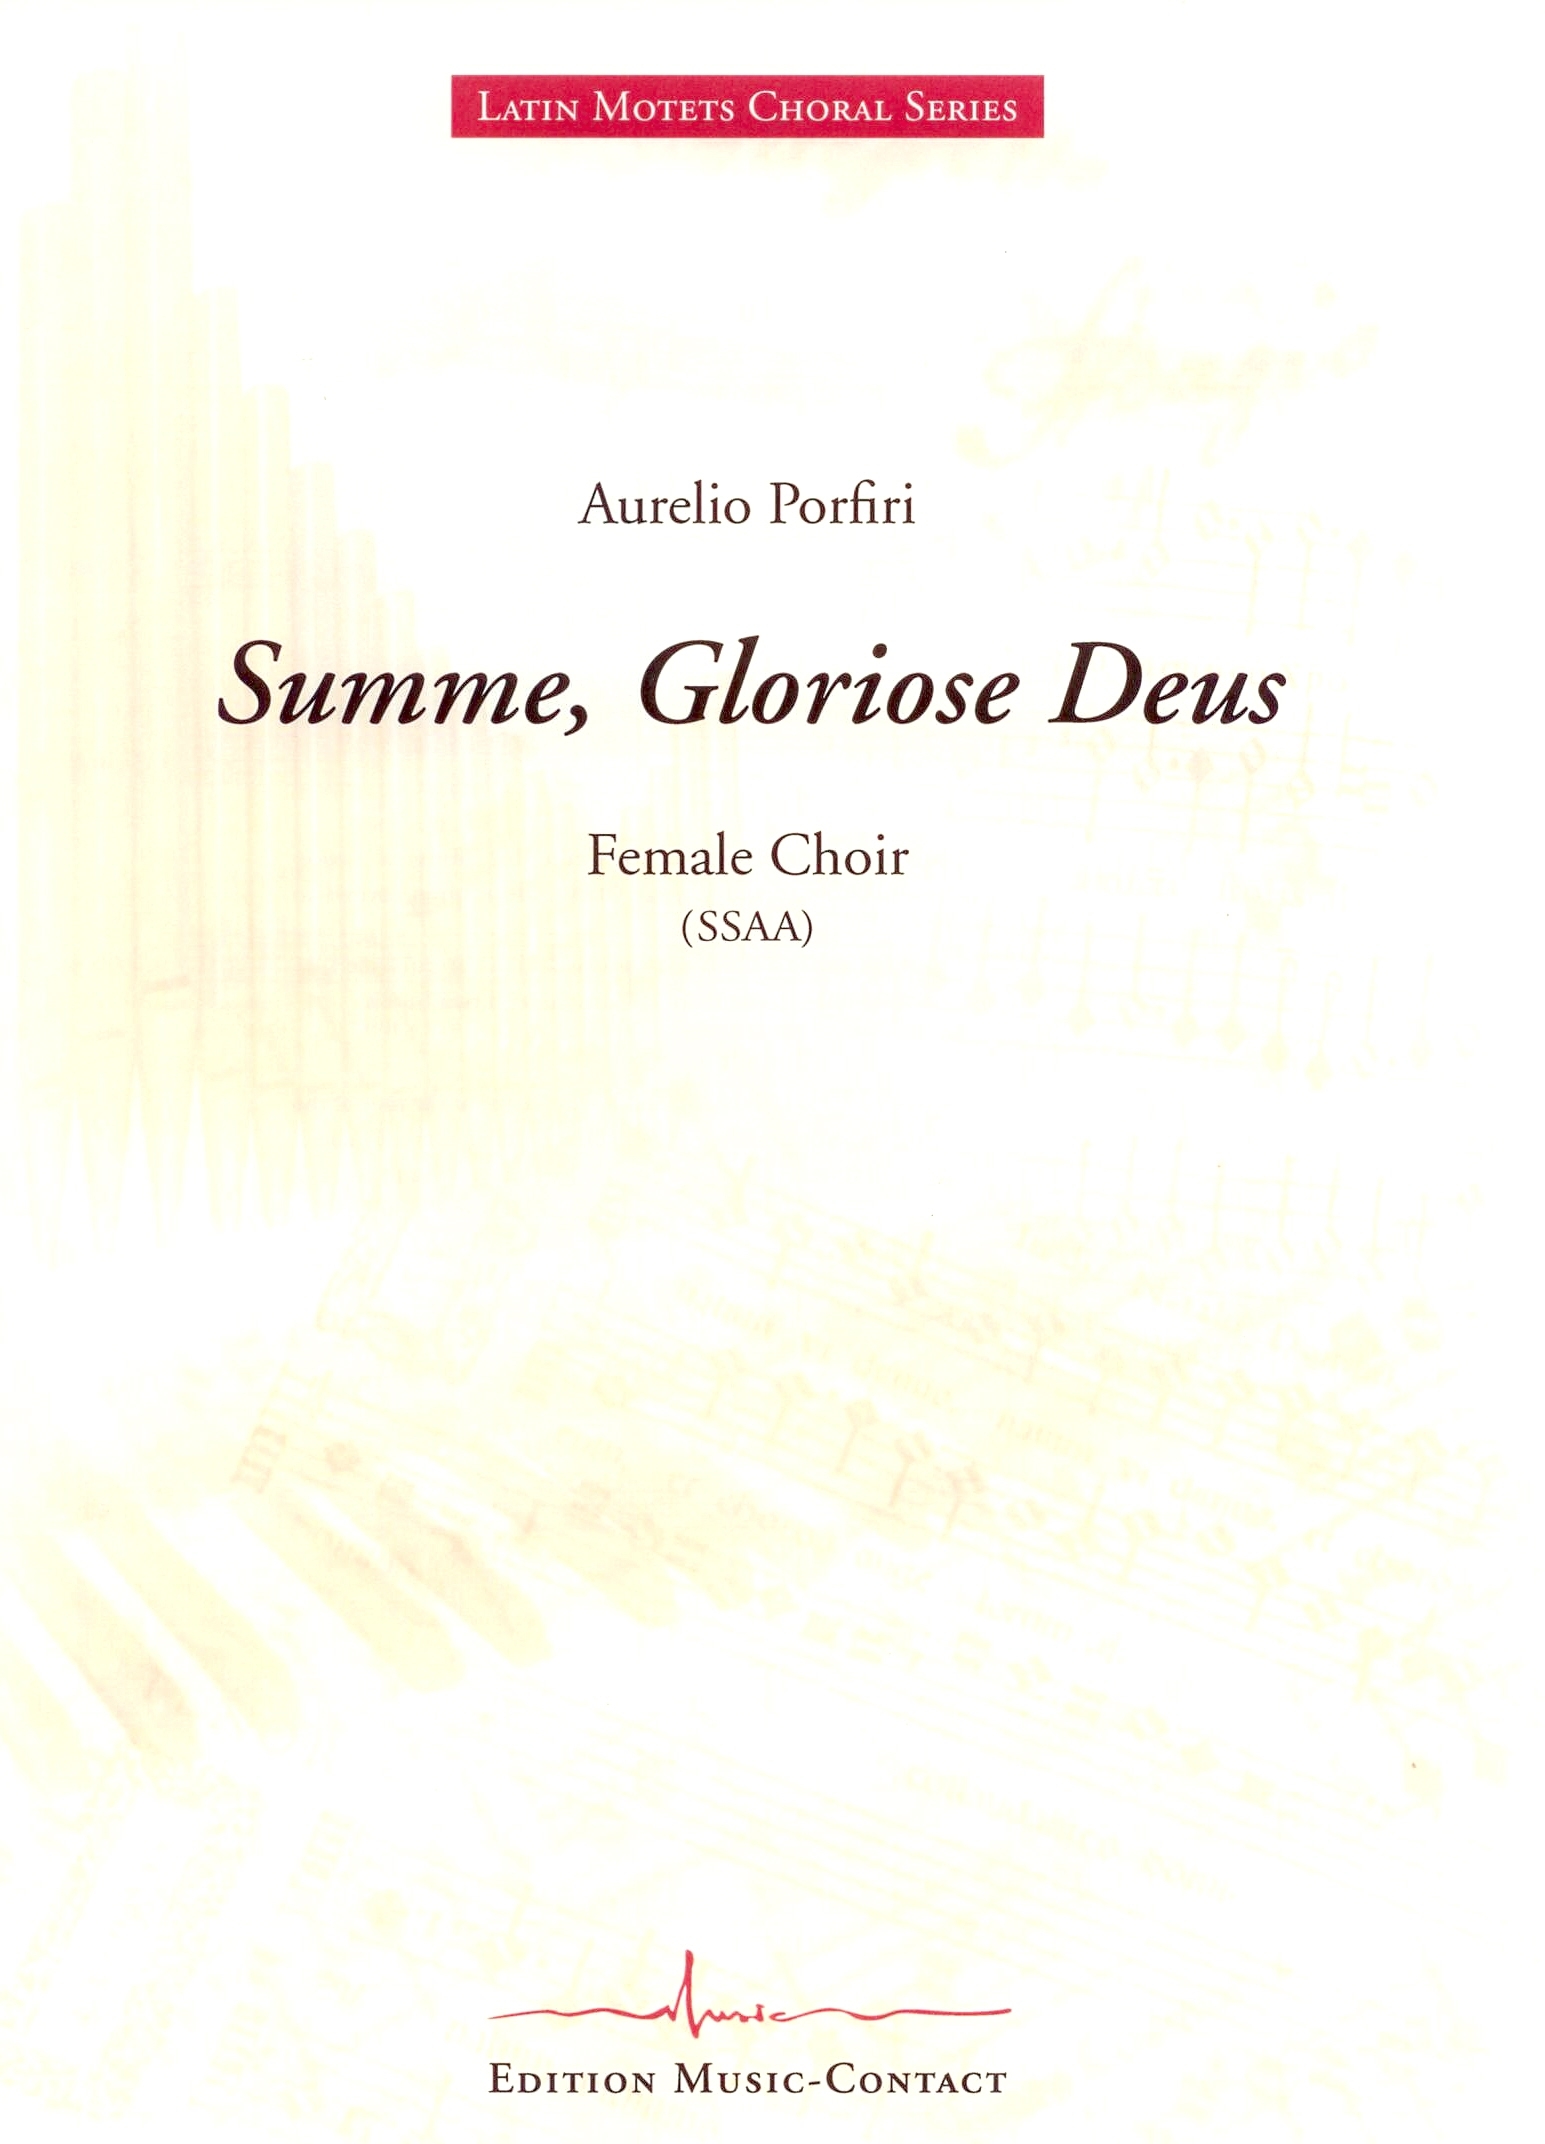 Summe, Gloriose Deus - Show sample score